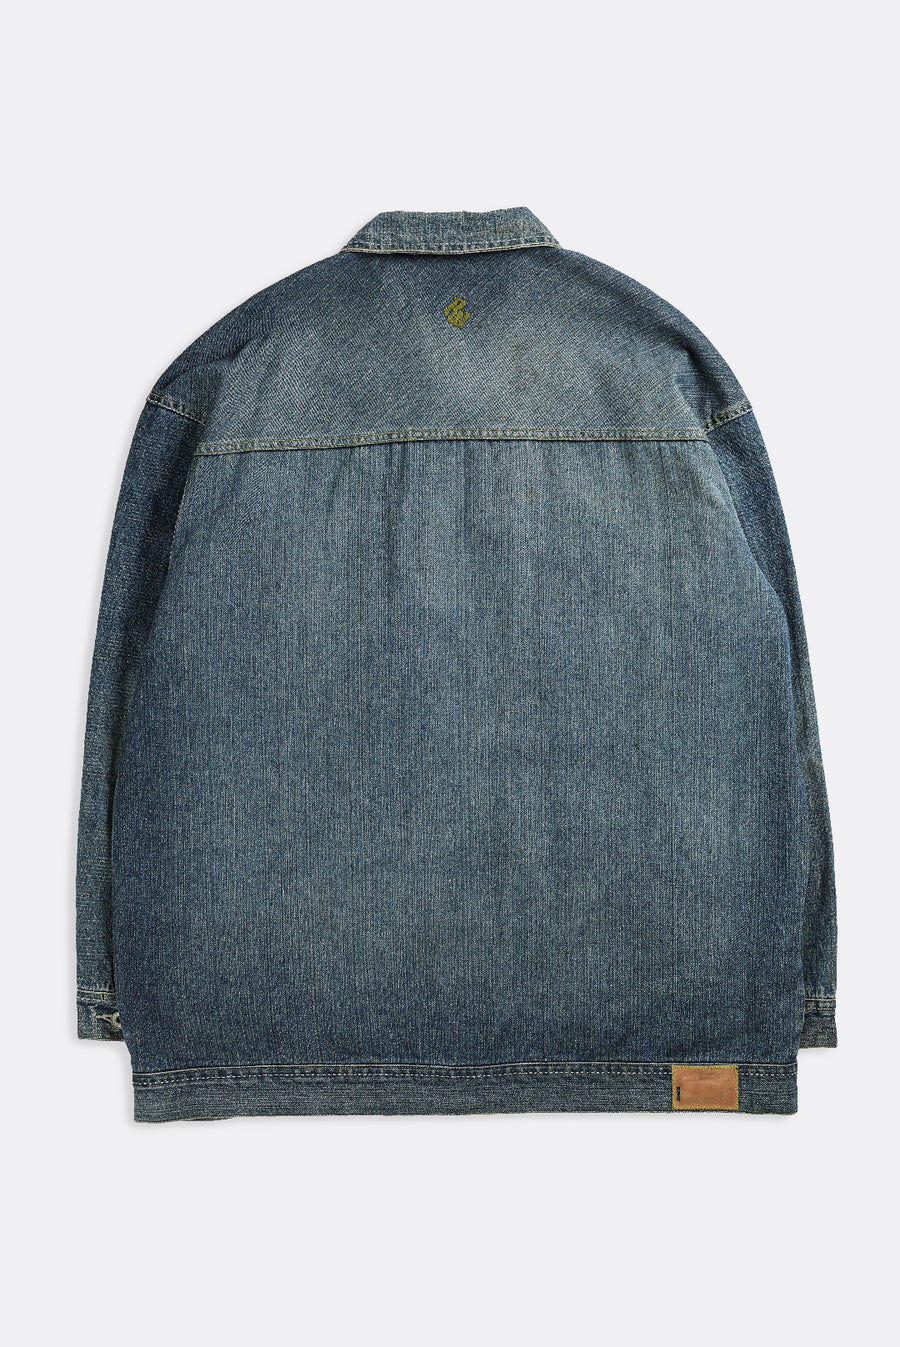 Vintage Rocawear Denim Jacket - 2XL